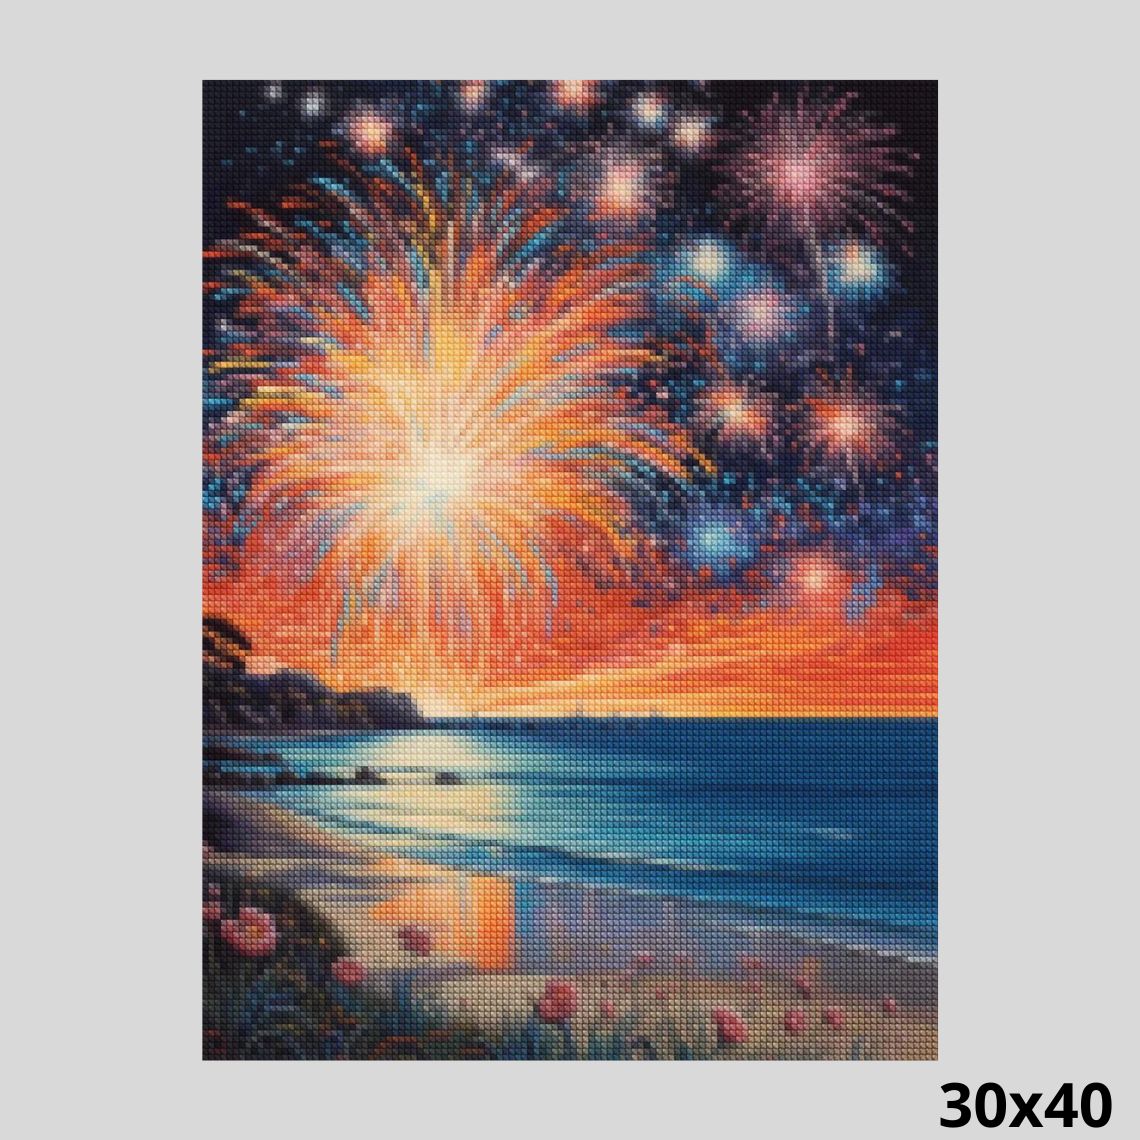 Fireworks at the Sea 30x40 - Diamond Painting